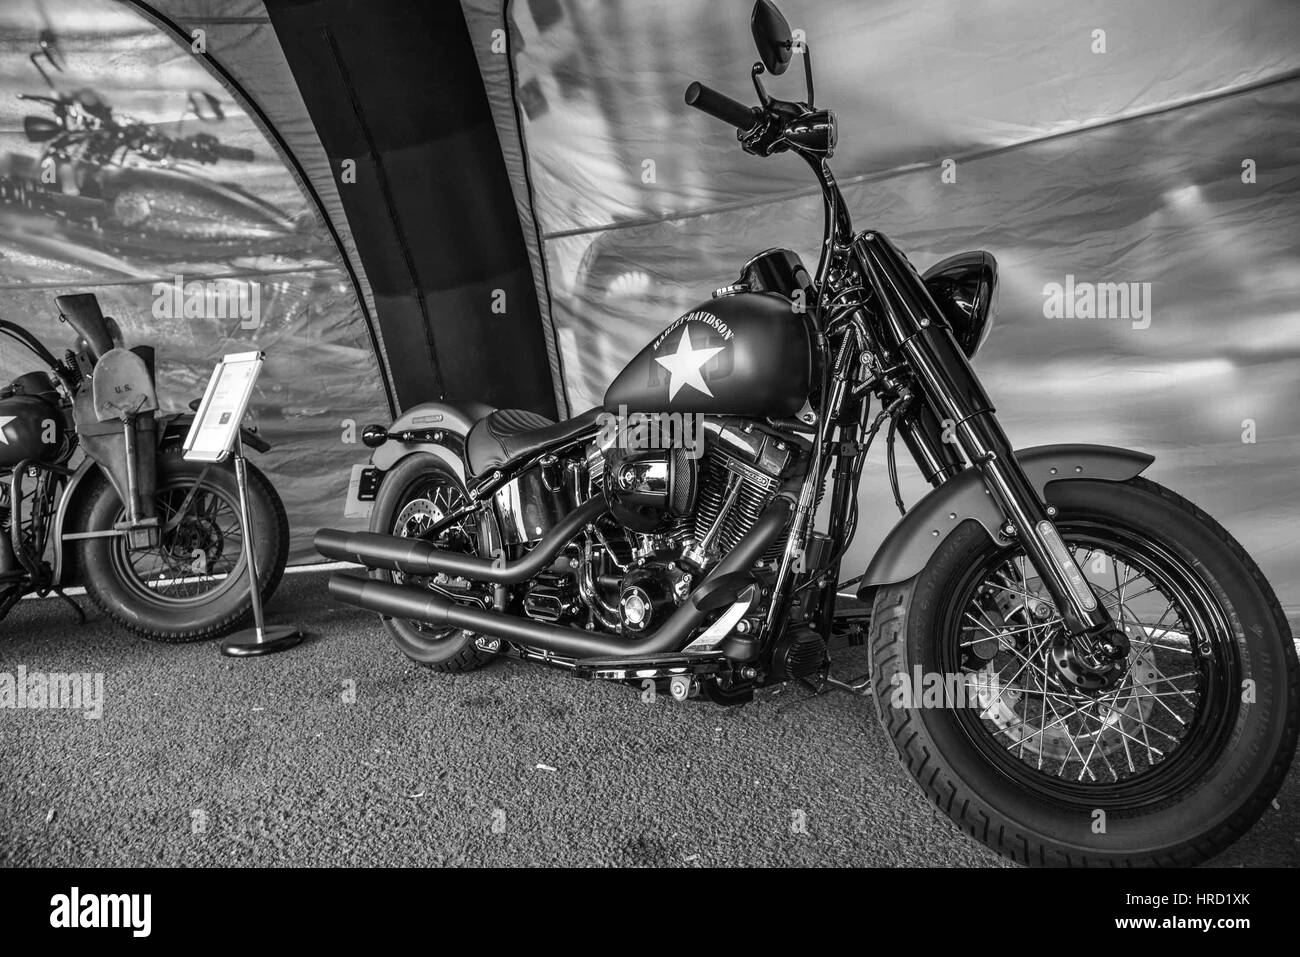 Harley Davidson motorbike exposition Stock Photo